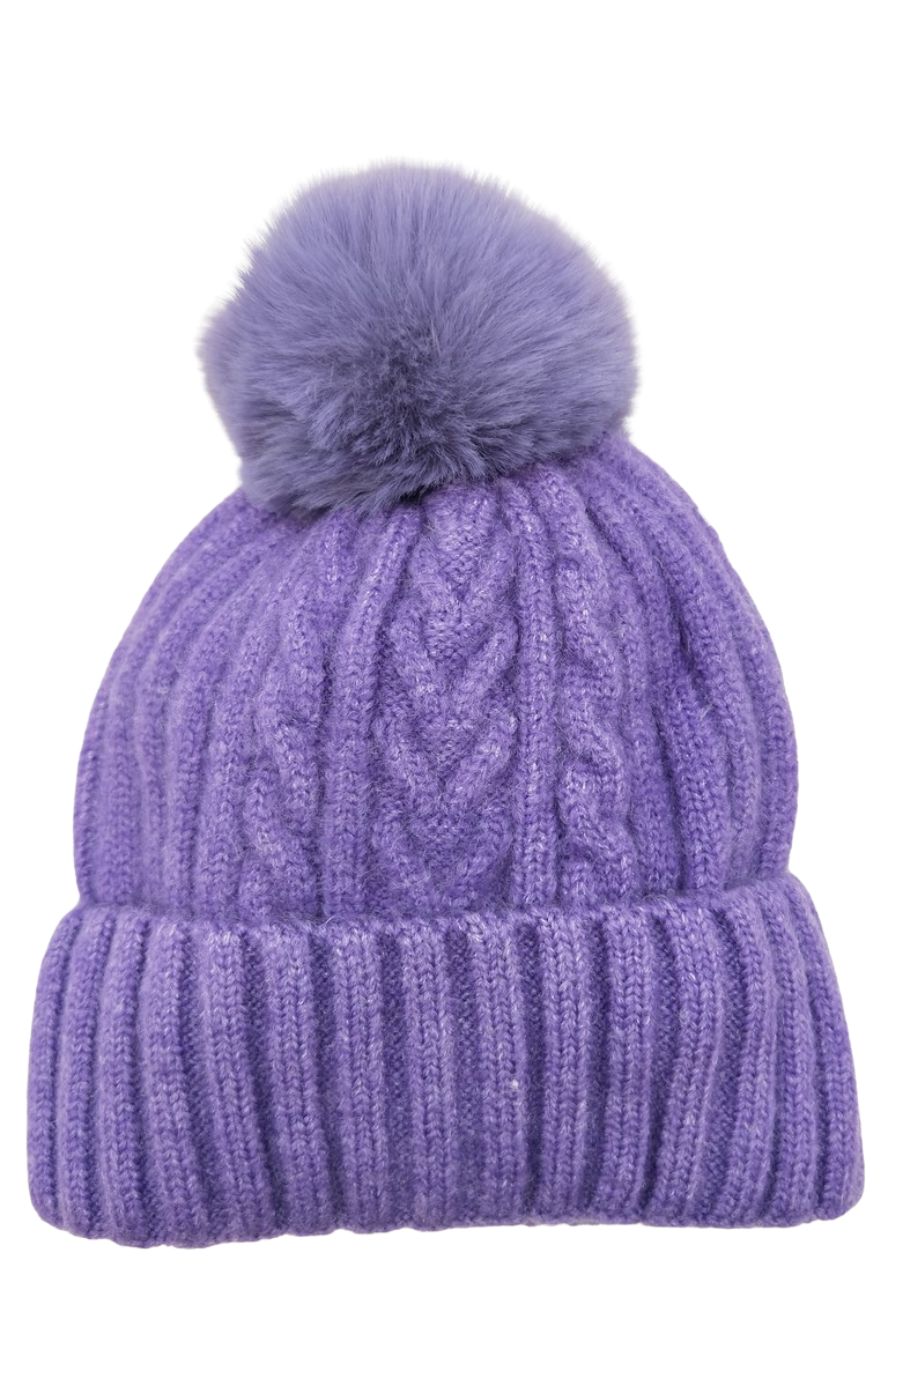 PomPom Hat in Purple